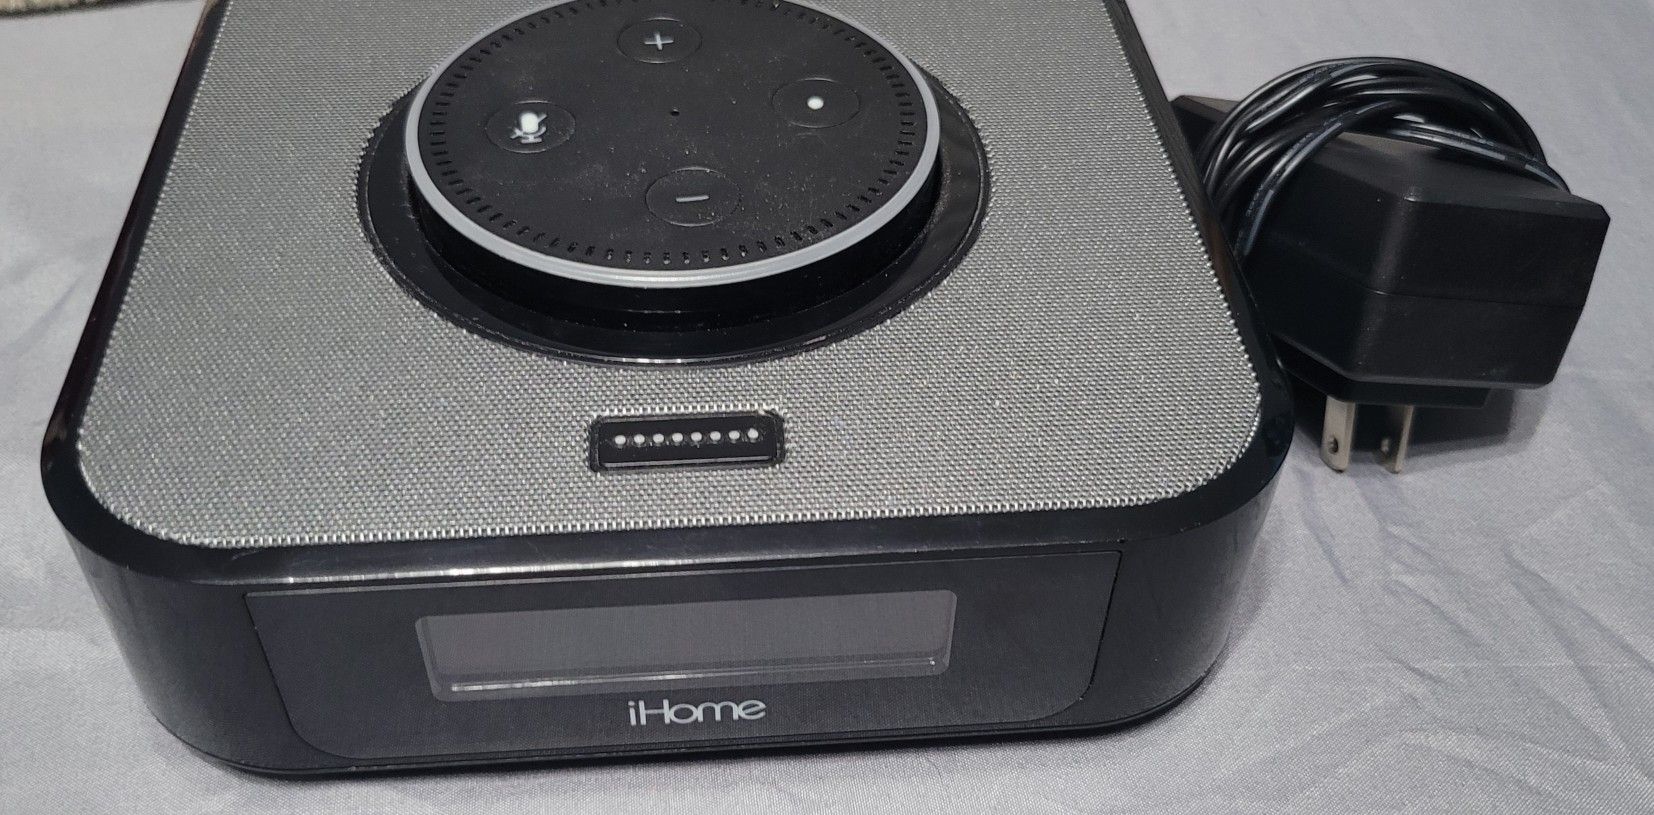 iHome iAVS1 Bedside Stereo Speaker System for Amazon Echo Dot

